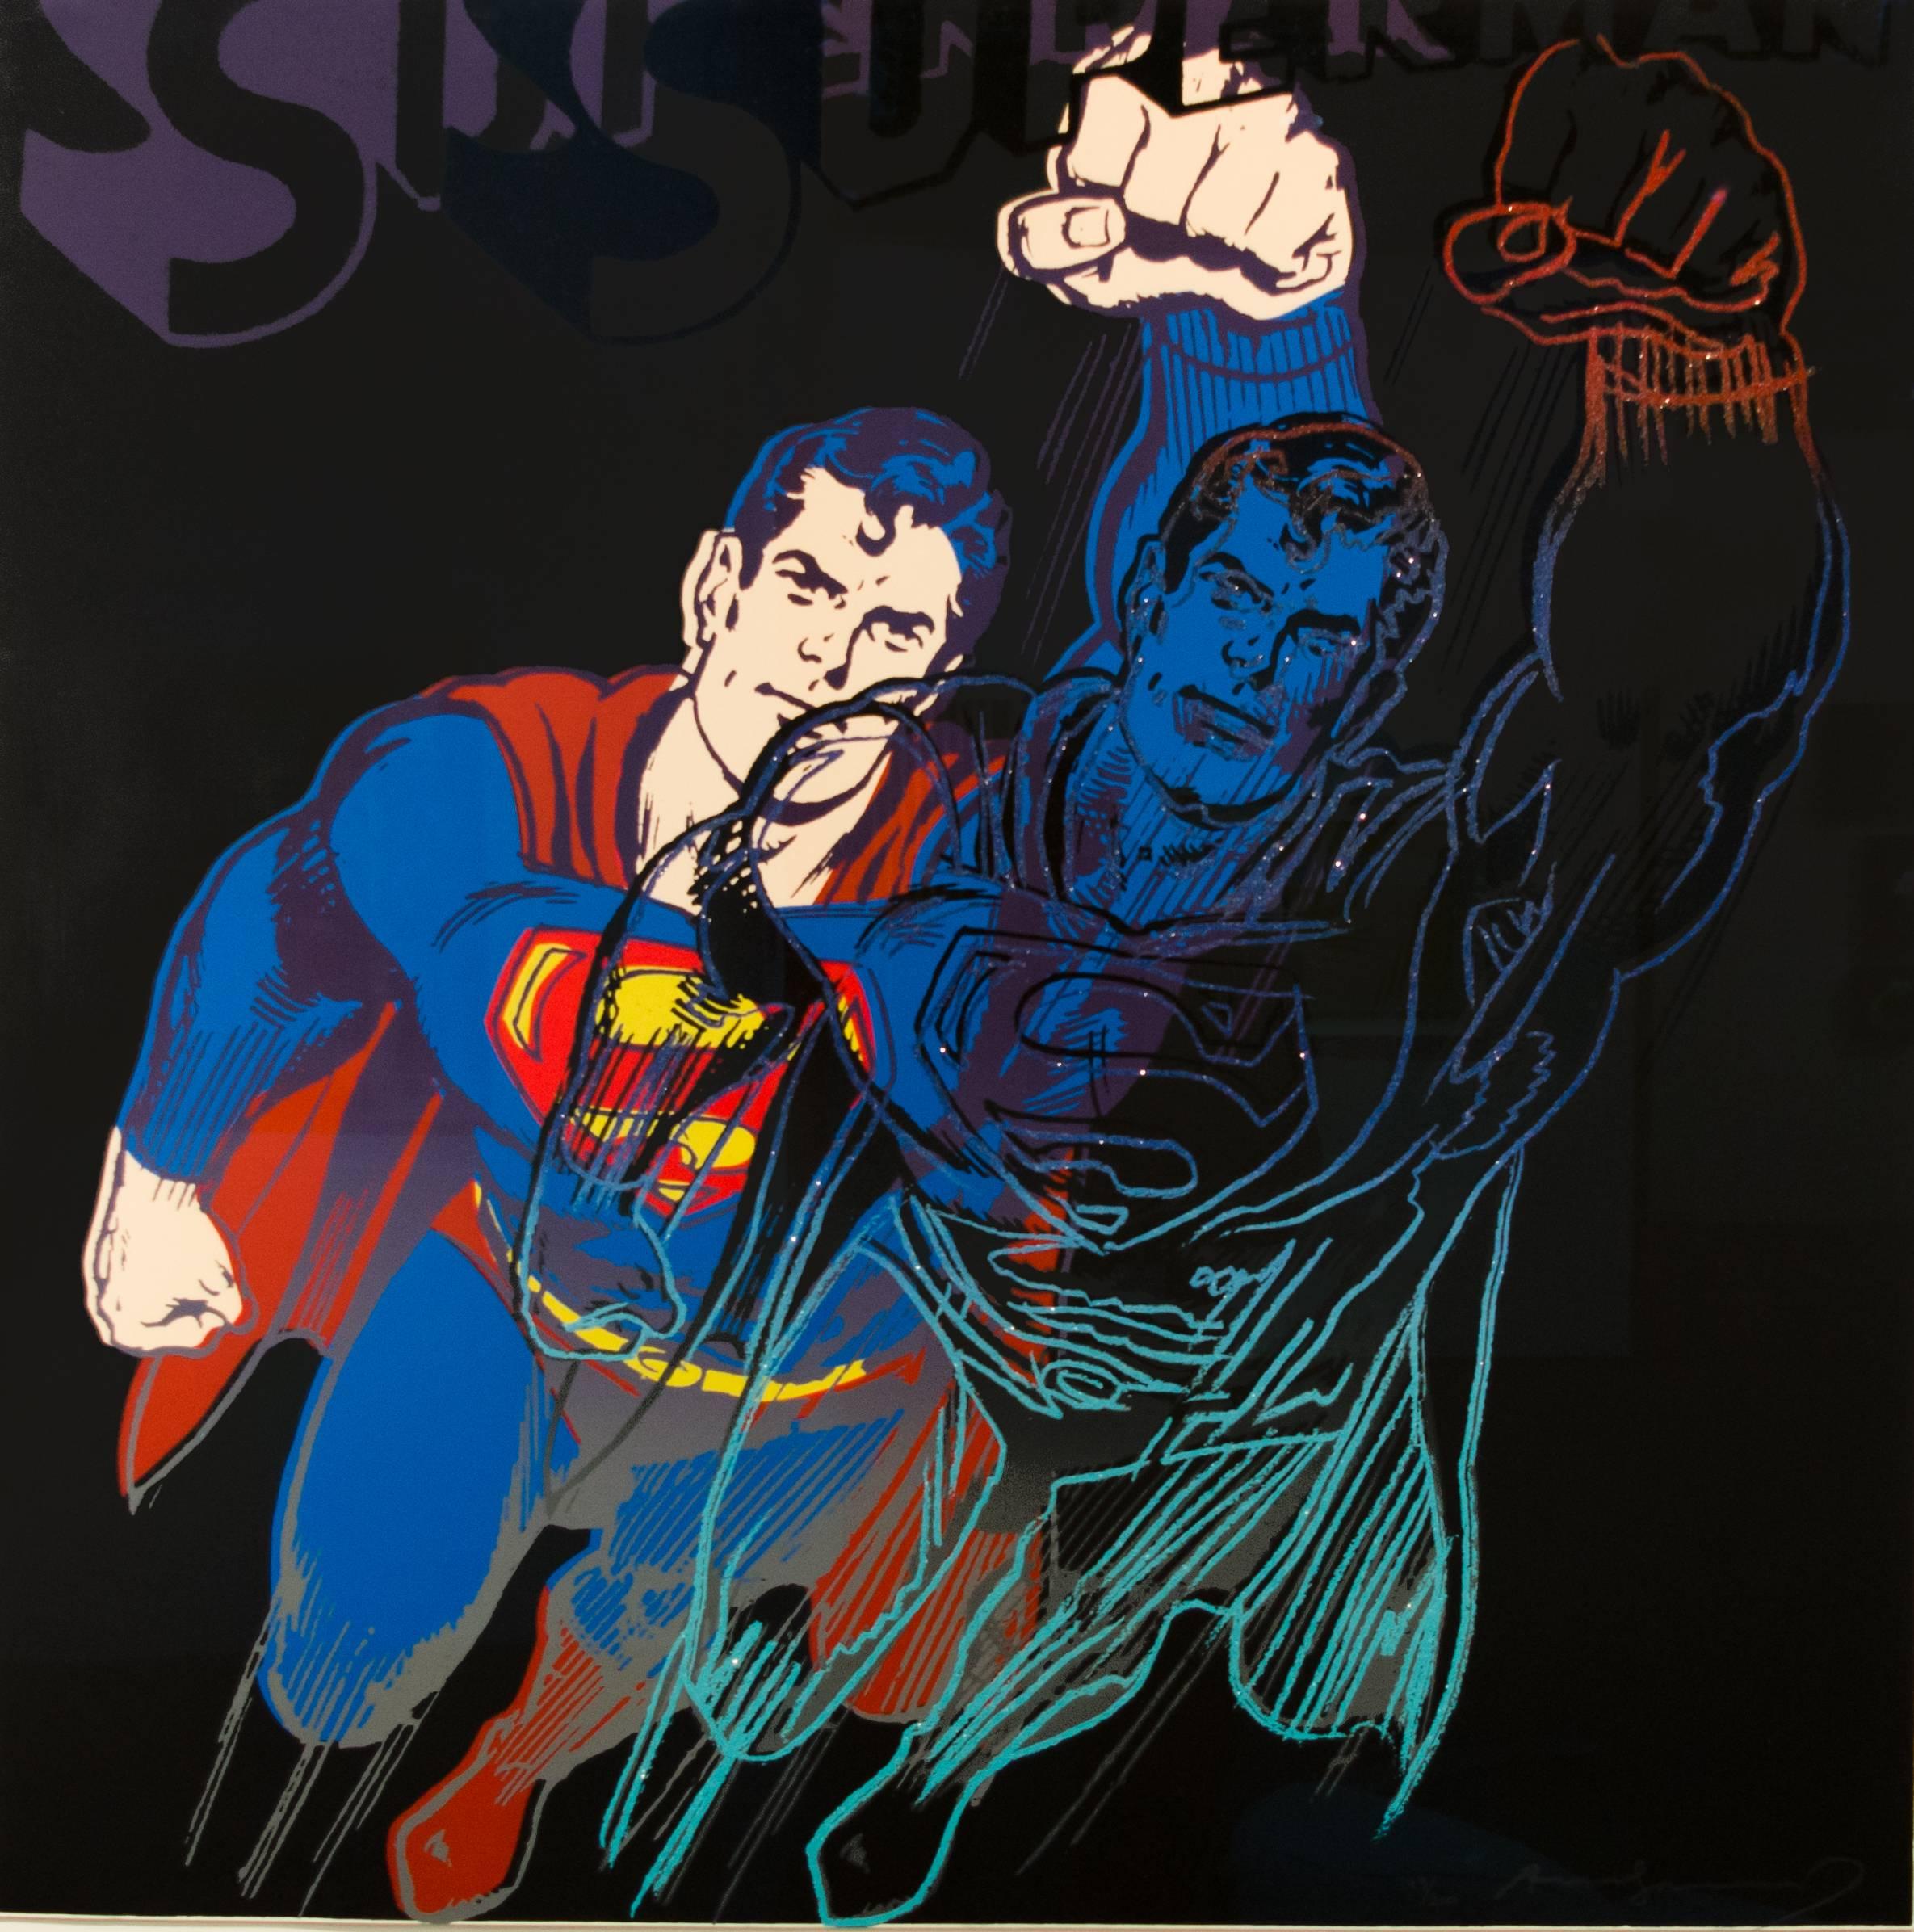 Andy Warhol Portrait Print - Superman (F. & S. II. 260)